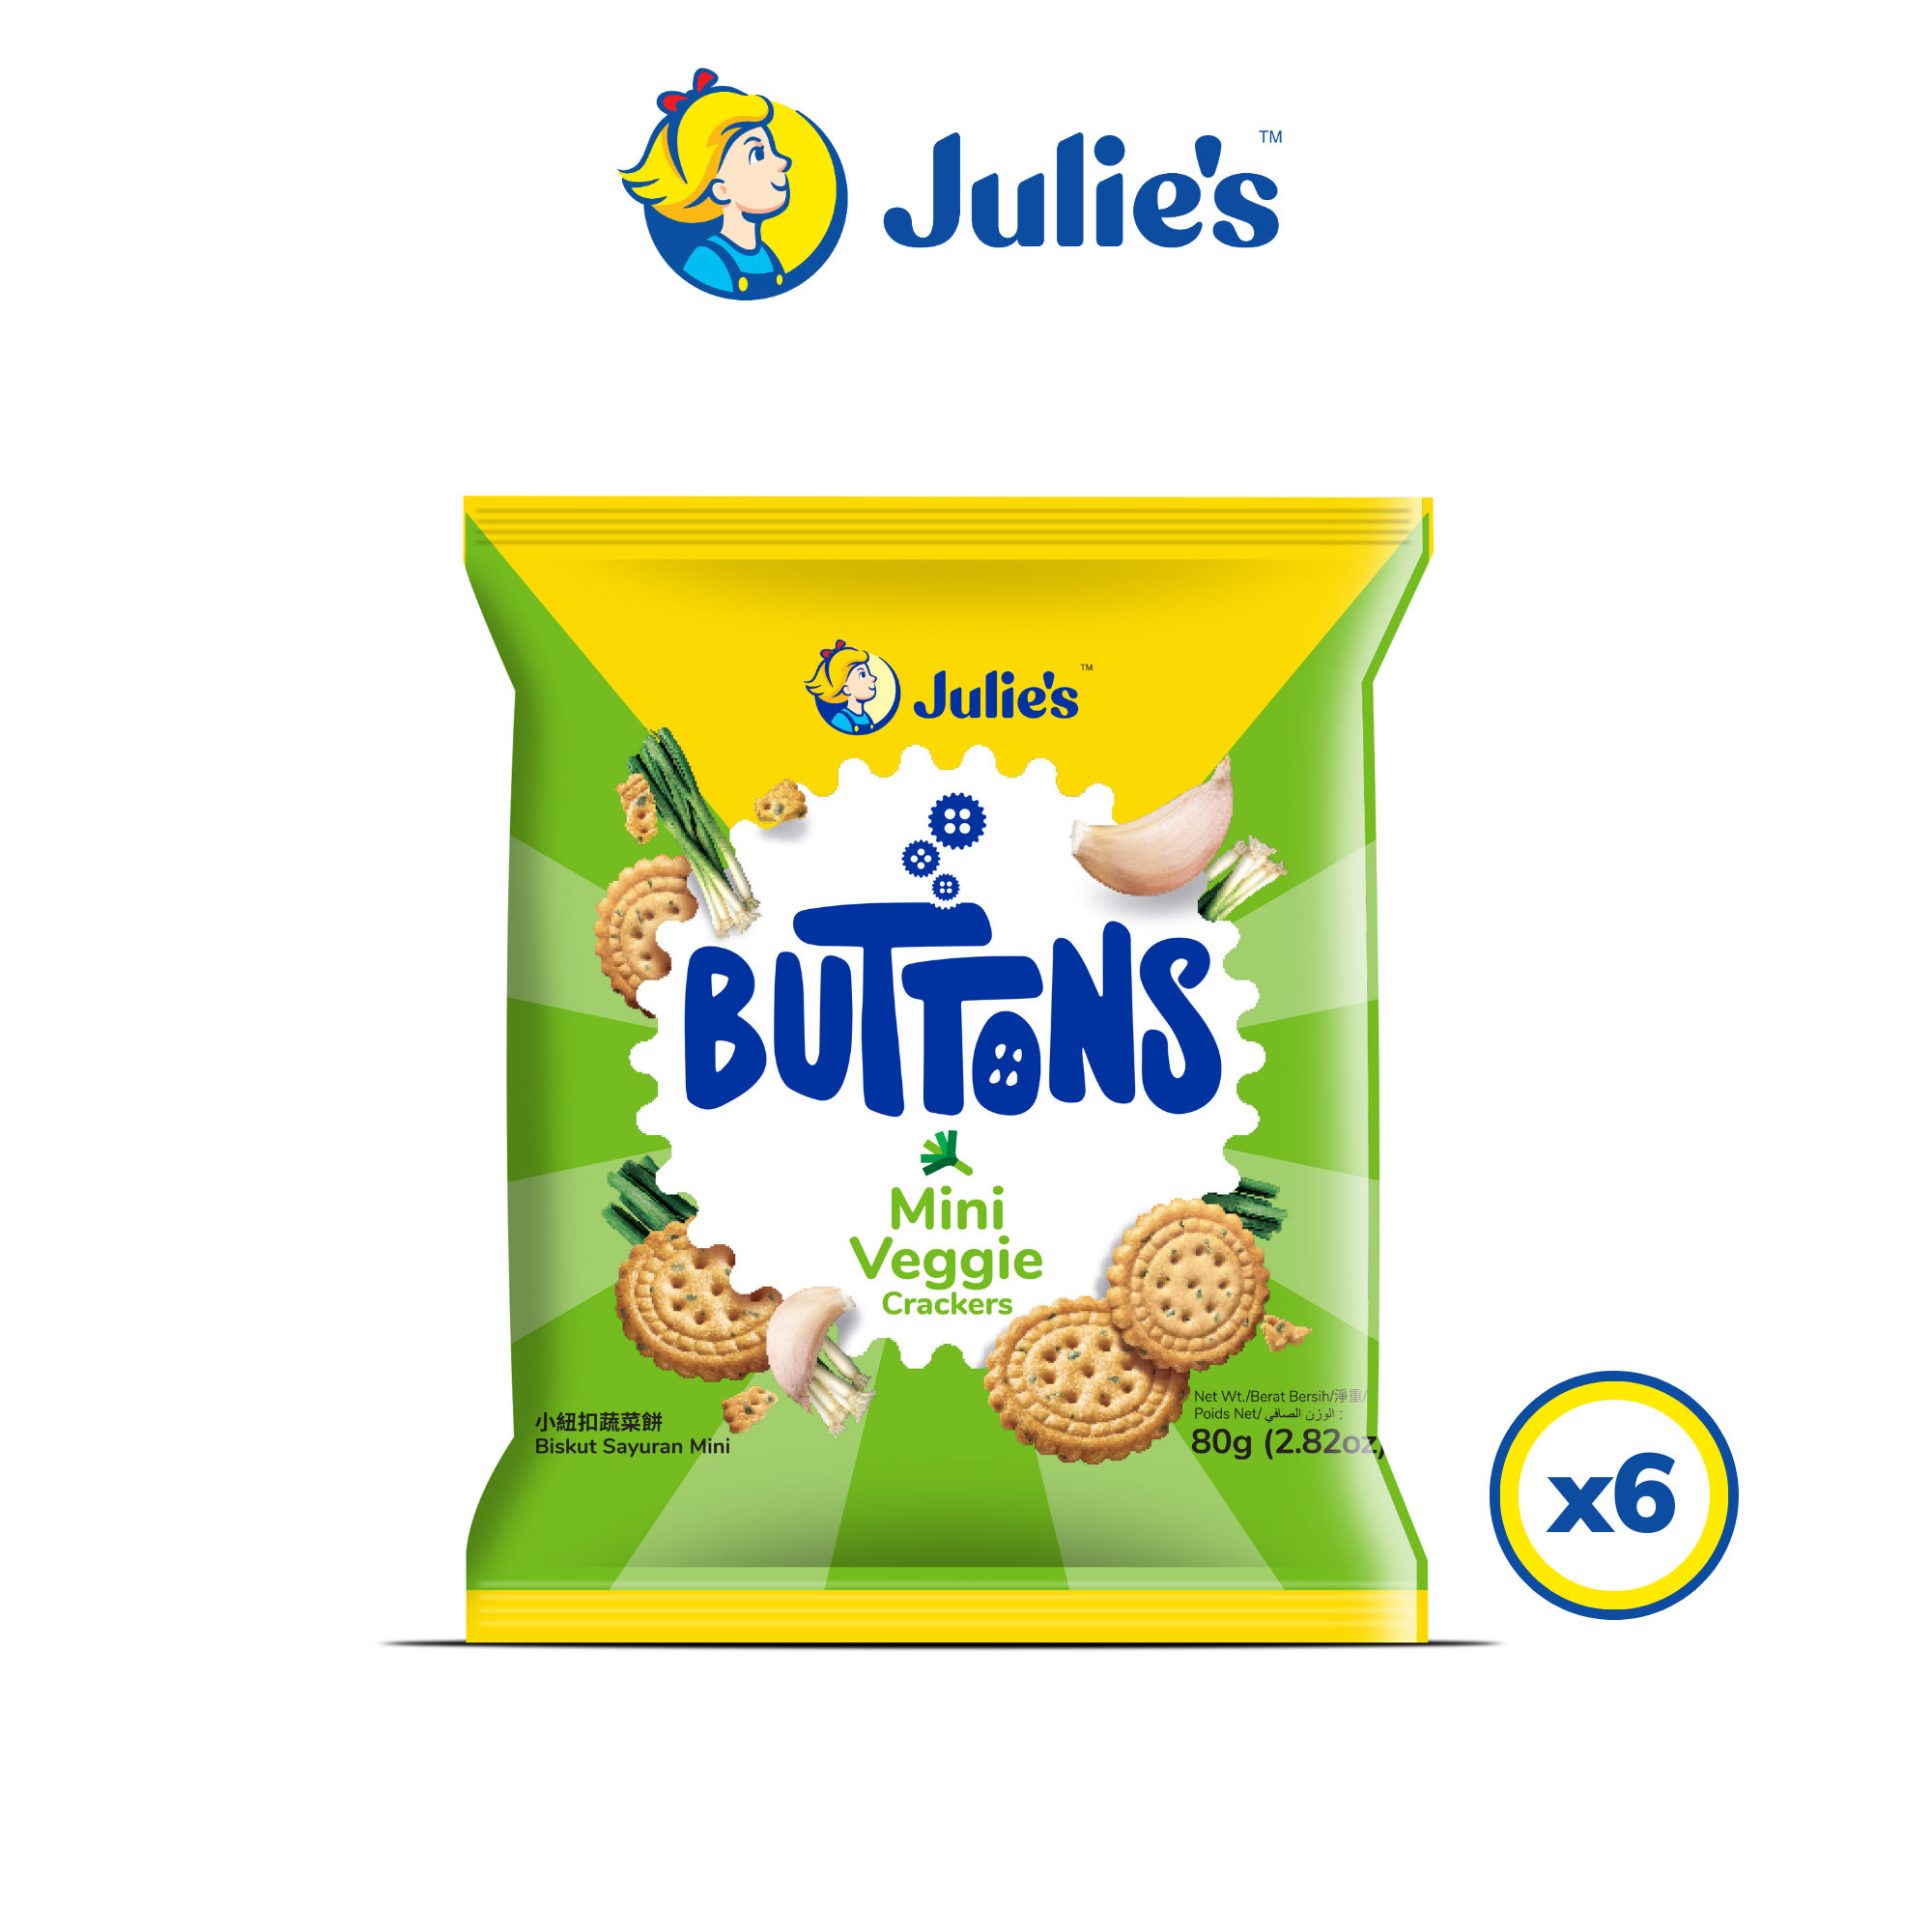 Julie's Buttons Mini Veggie Crackers 80g x 6 packs